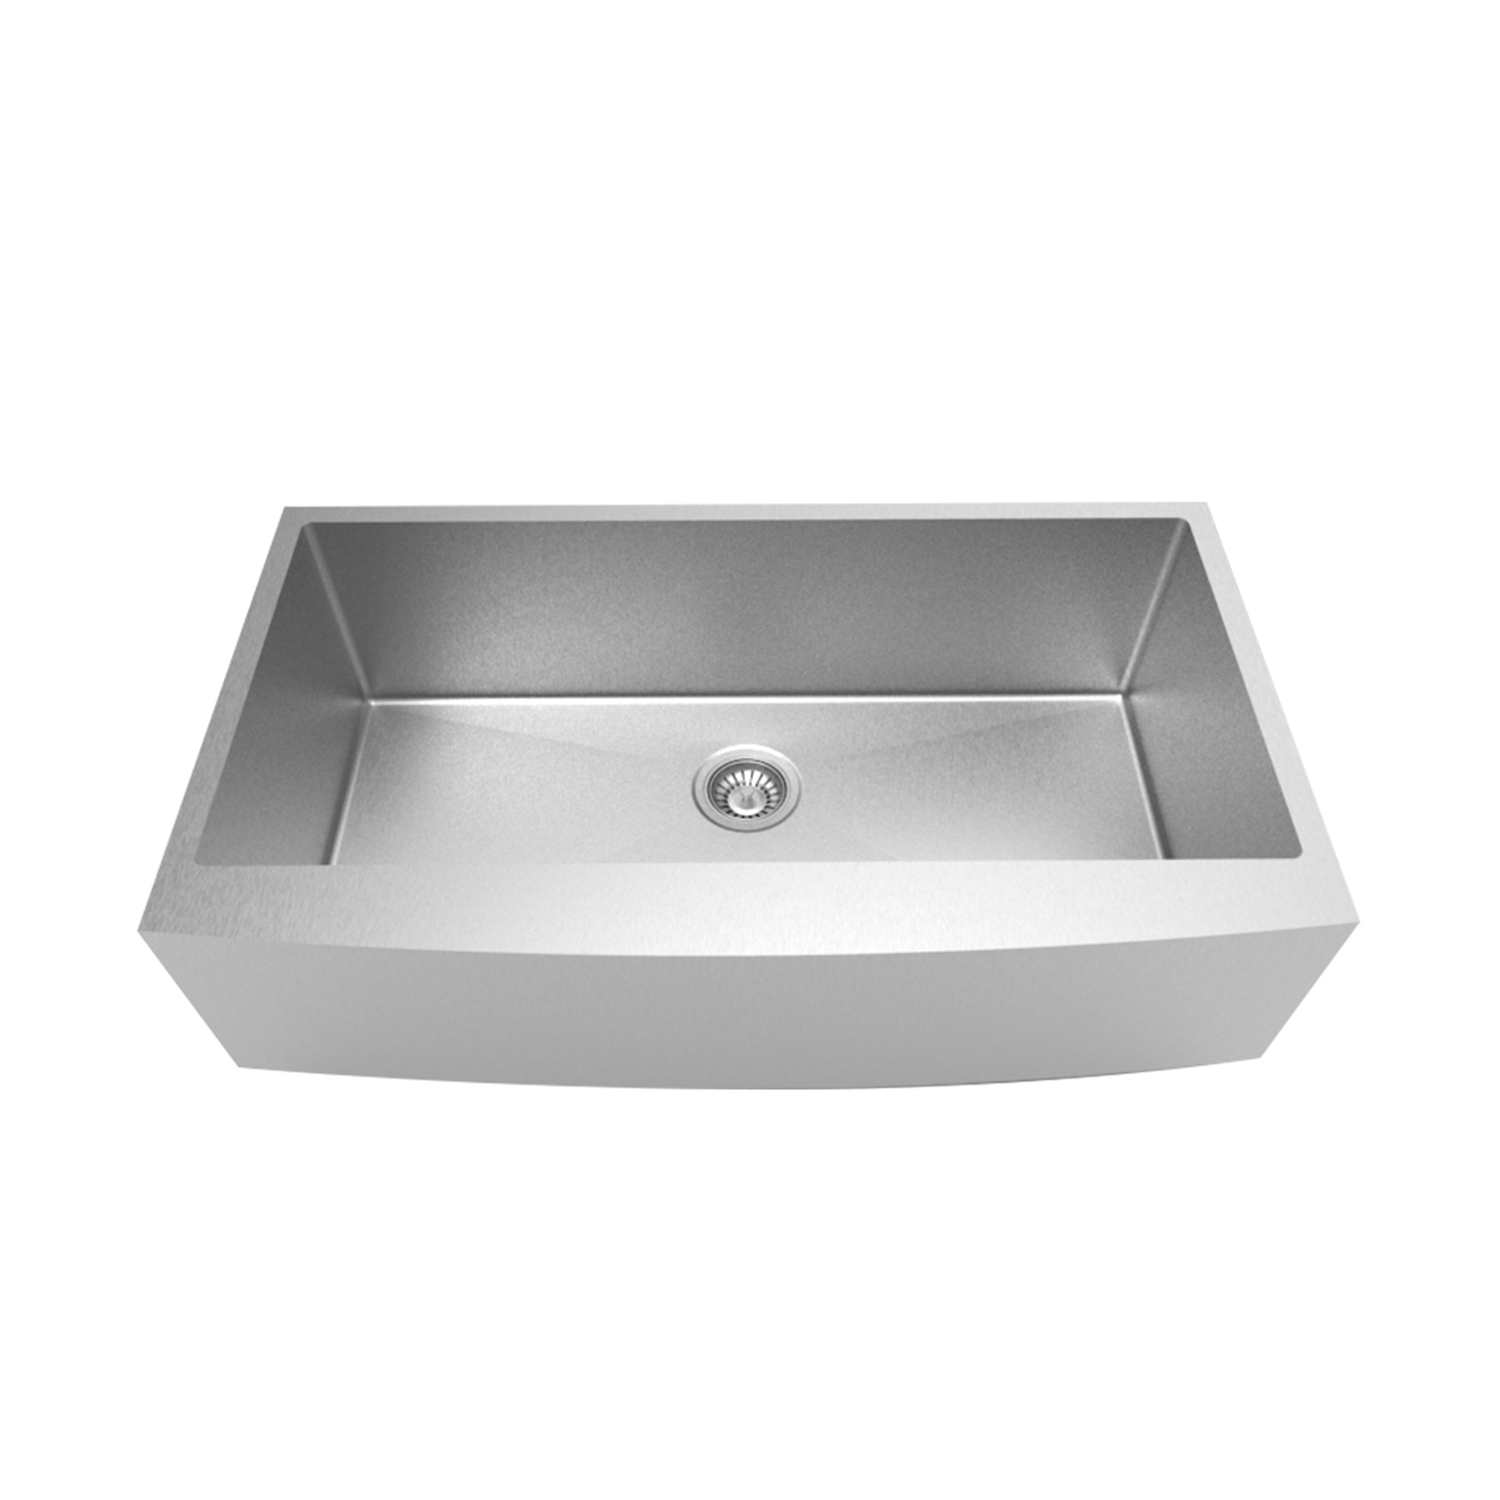 HU3622D 304 Stainless Steel Double Bowl Farmhouse Apron Kitchen Sink